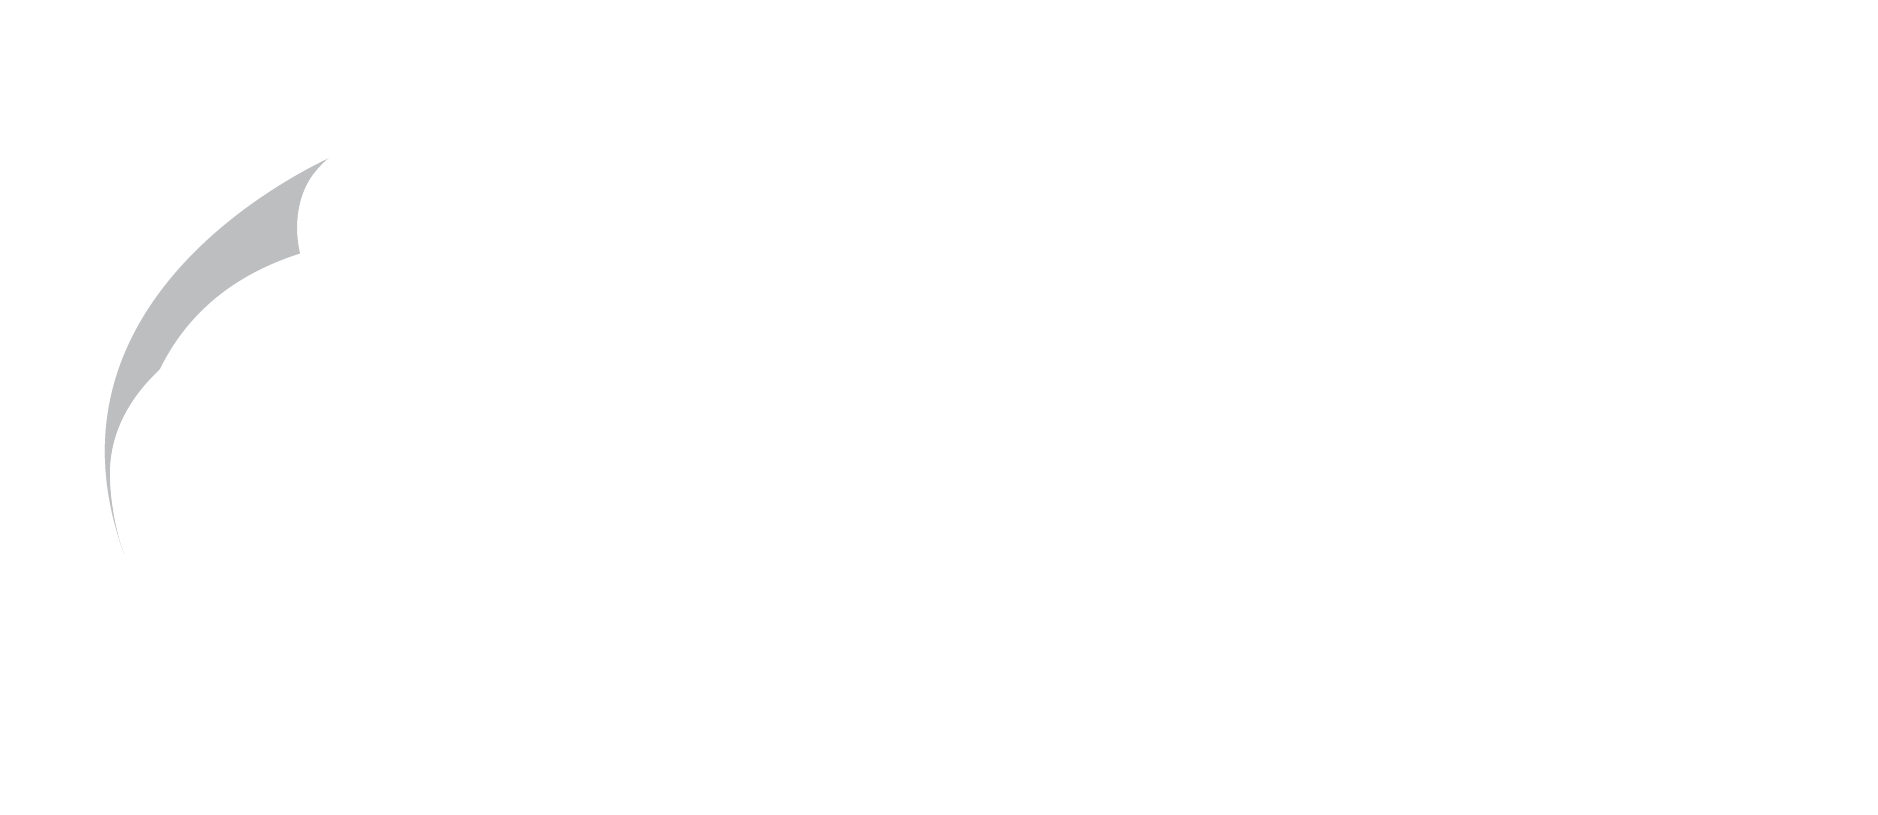 About — Dakota Angler Ice Institute